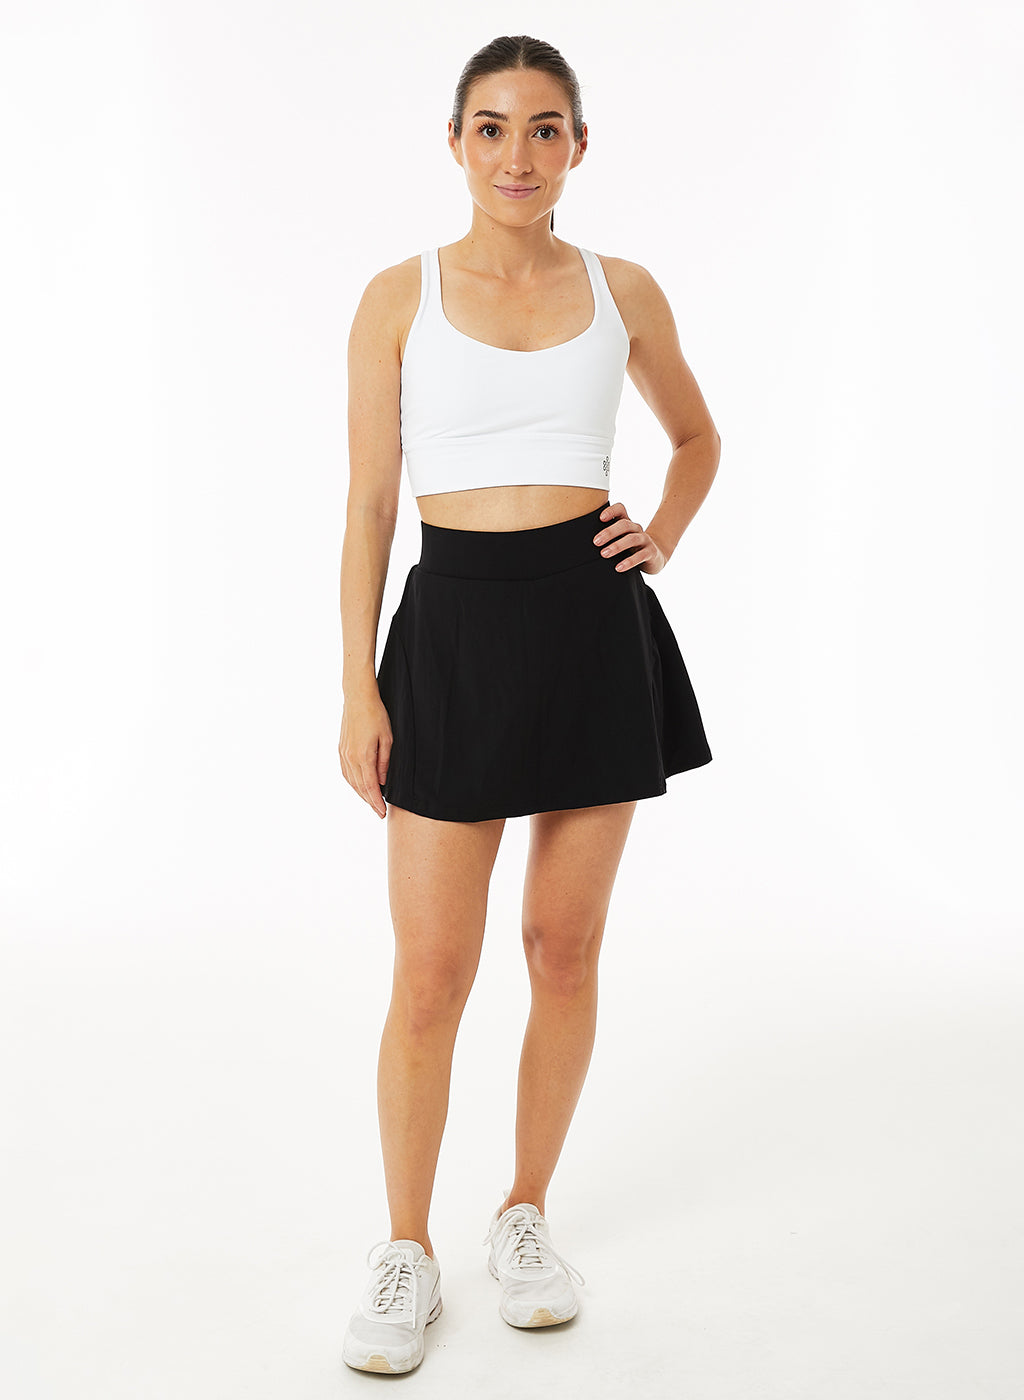 Maya Zipper Tennis Skirt - Black